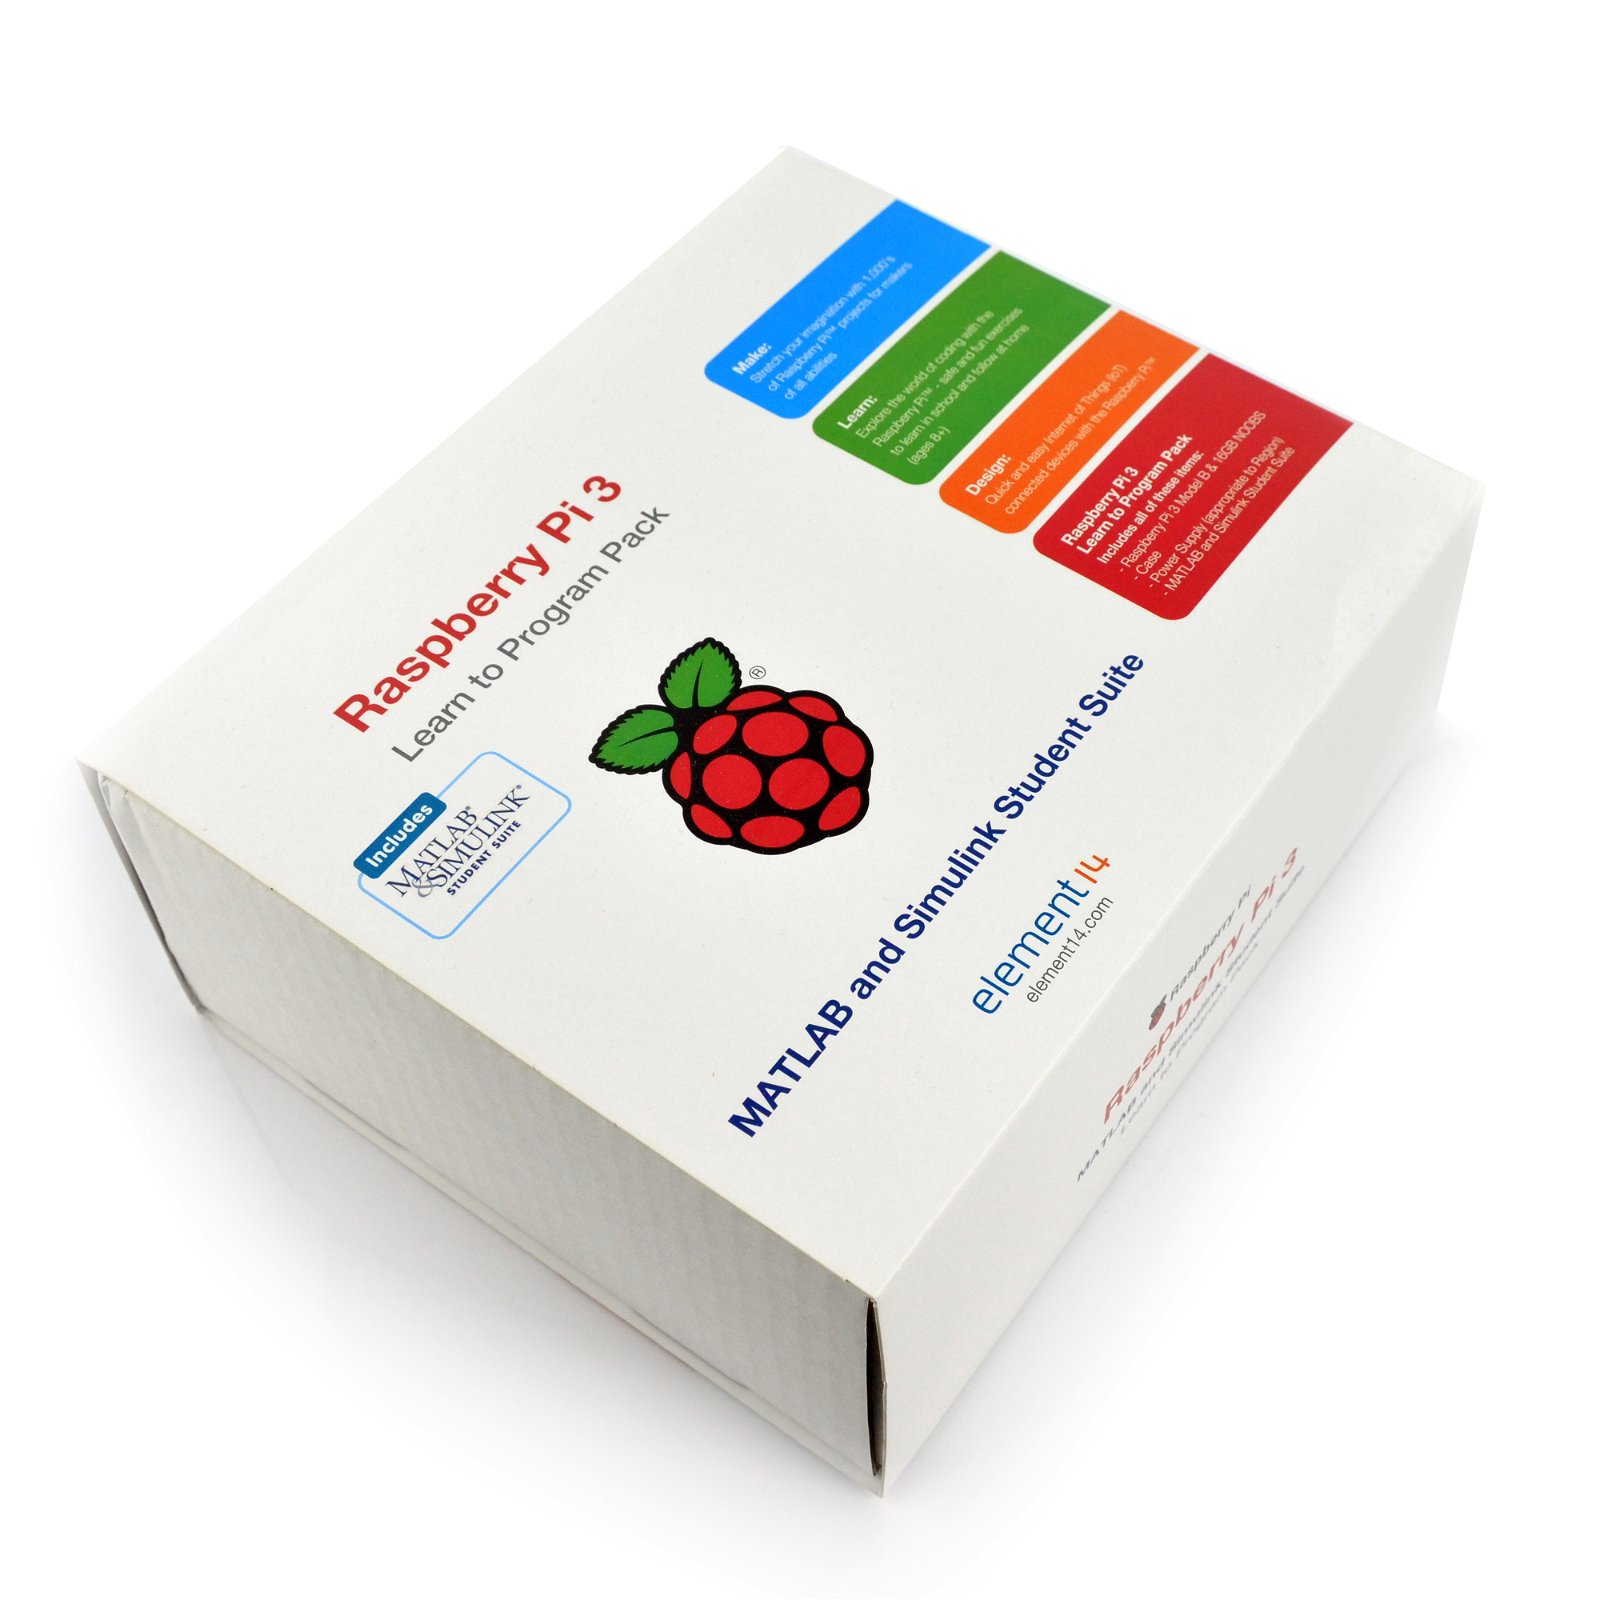 Sada Raspberry Pi 3B s programy Matlab a Simulink